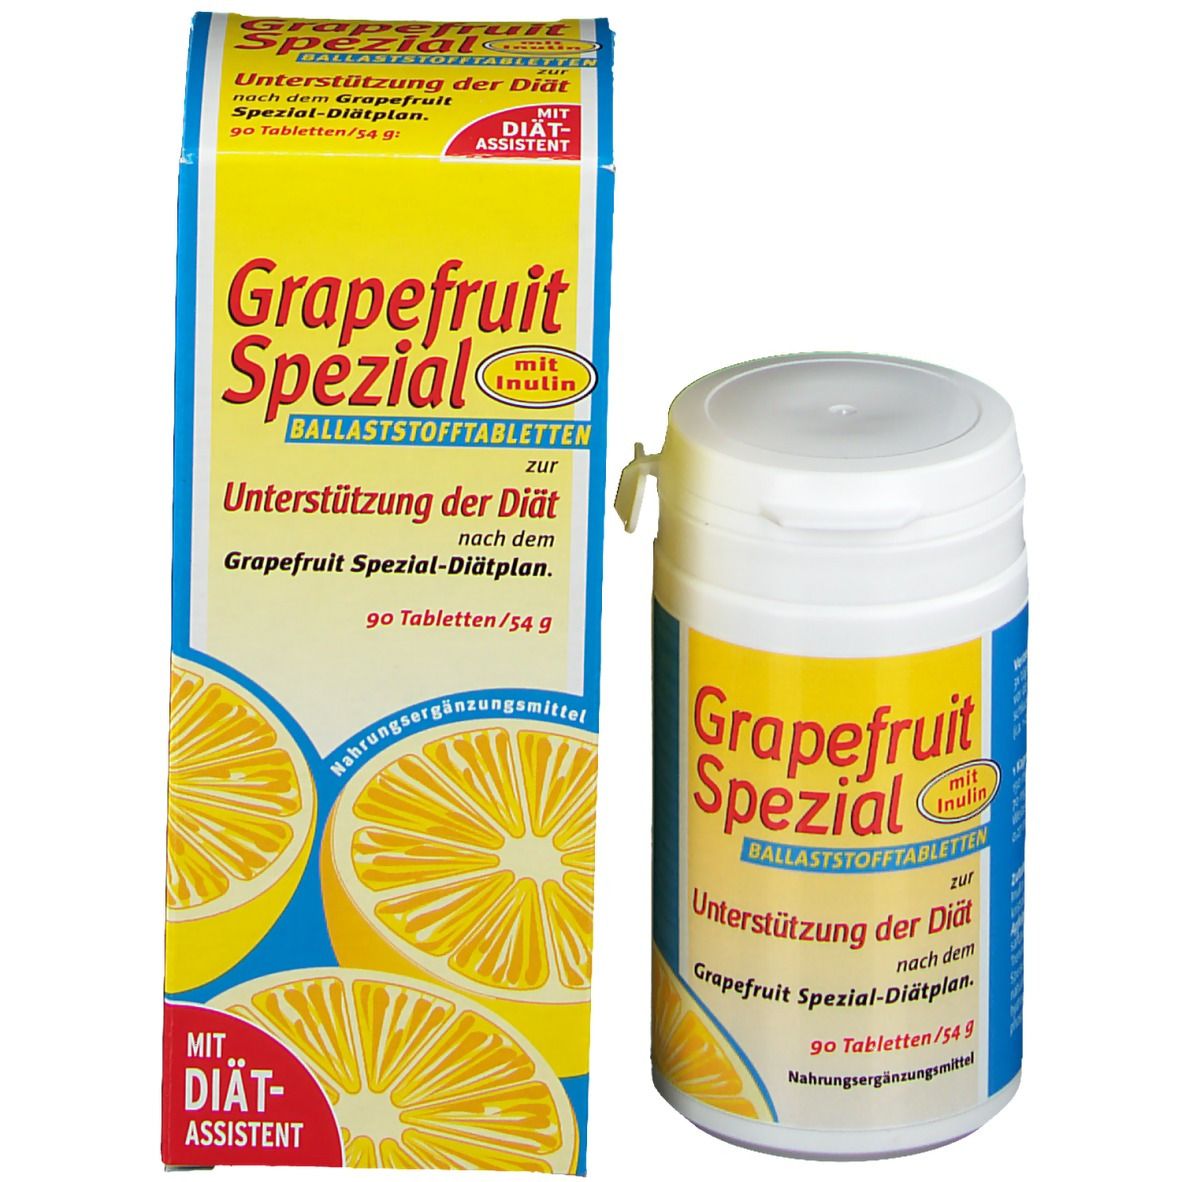 Grapefruit Spezial Diätsystem Tabletten